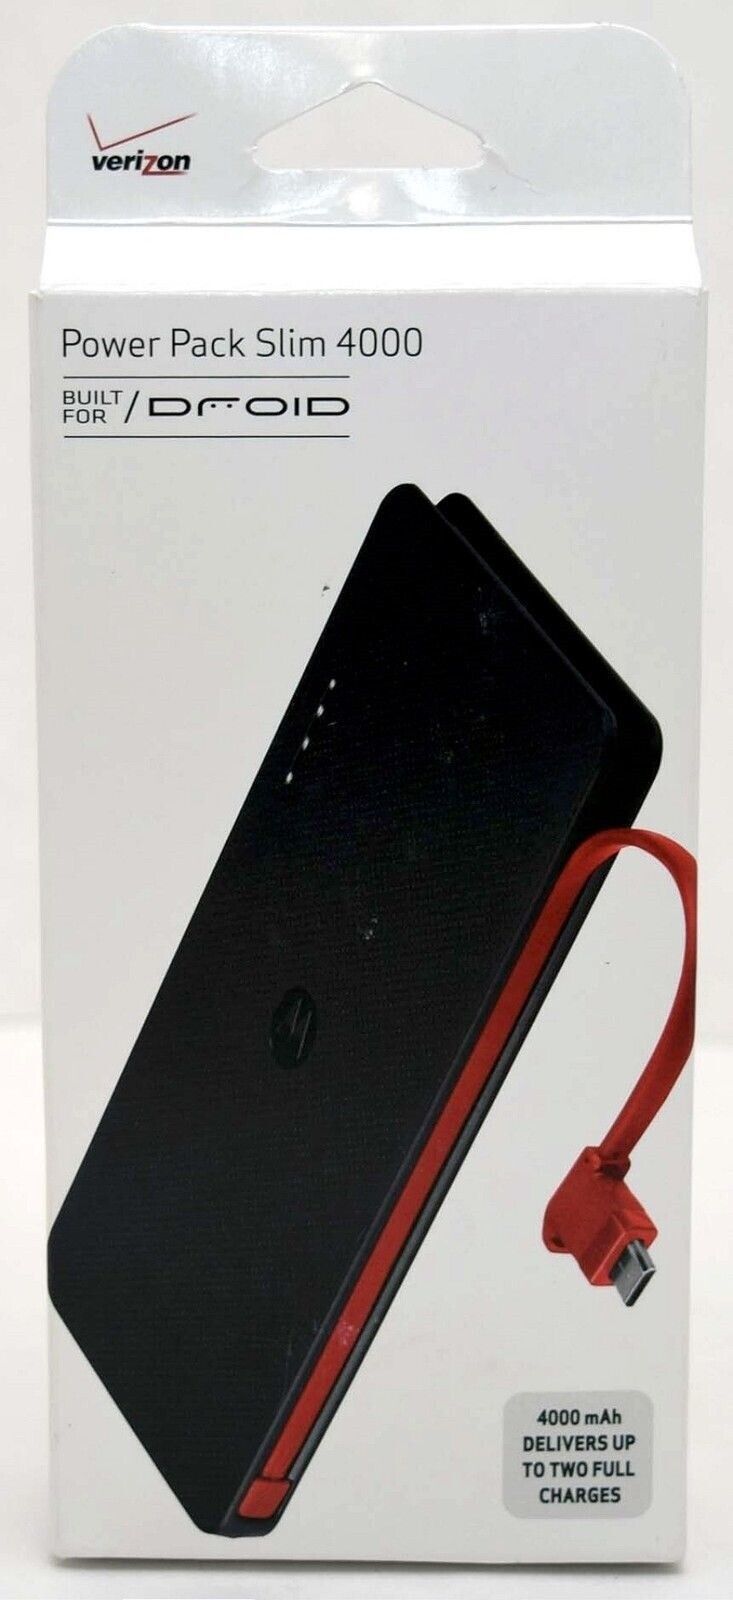 NEW Motorola Verizon DRDUNIPWR4 DROID Power Pack Slim 4000 4000mAh RED/BLK P4000 - $17.82